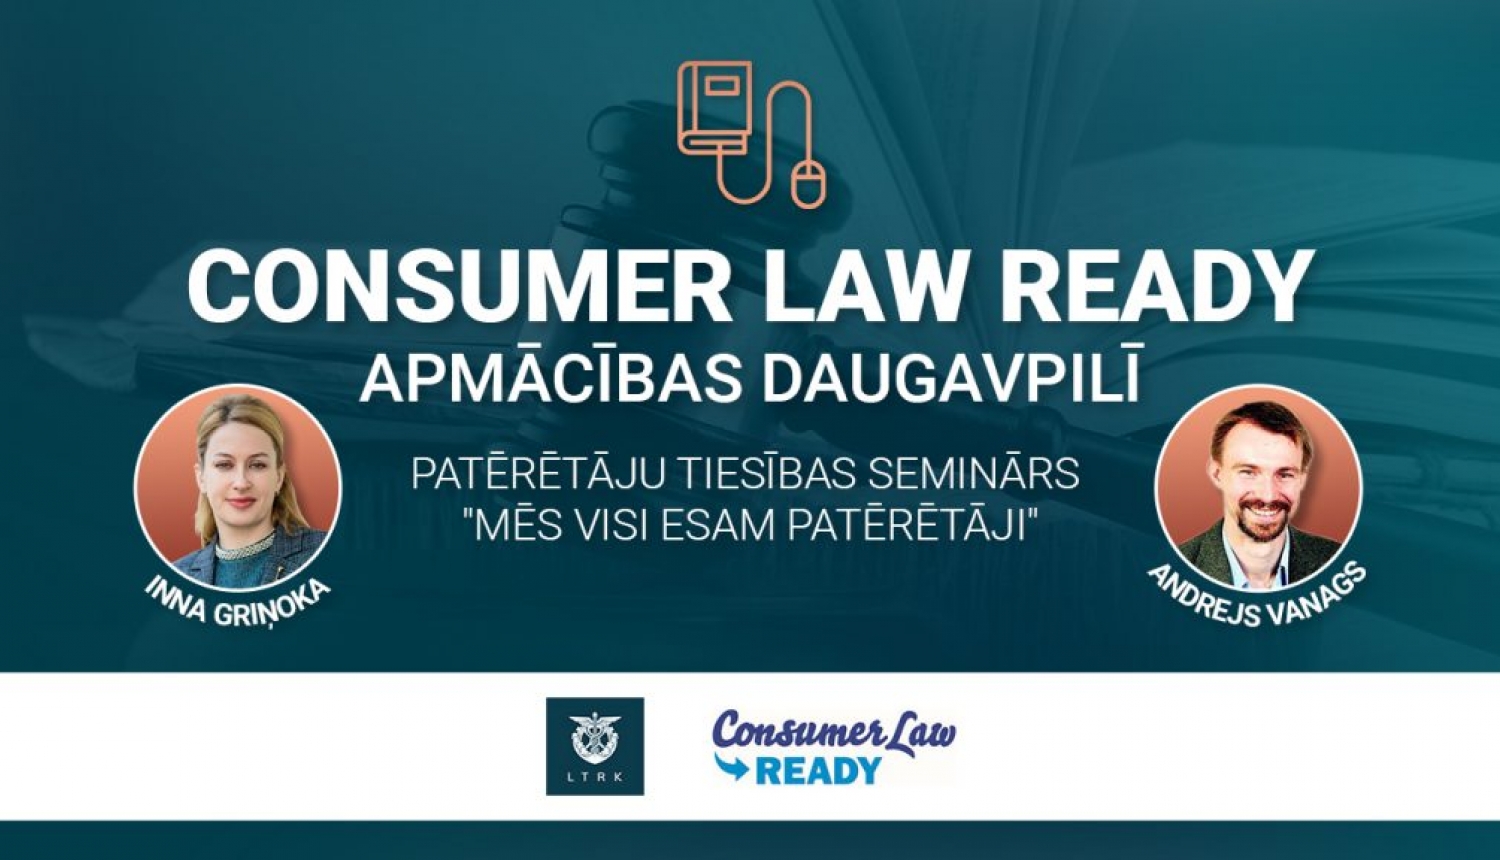 Baneris Consumer Law Ready